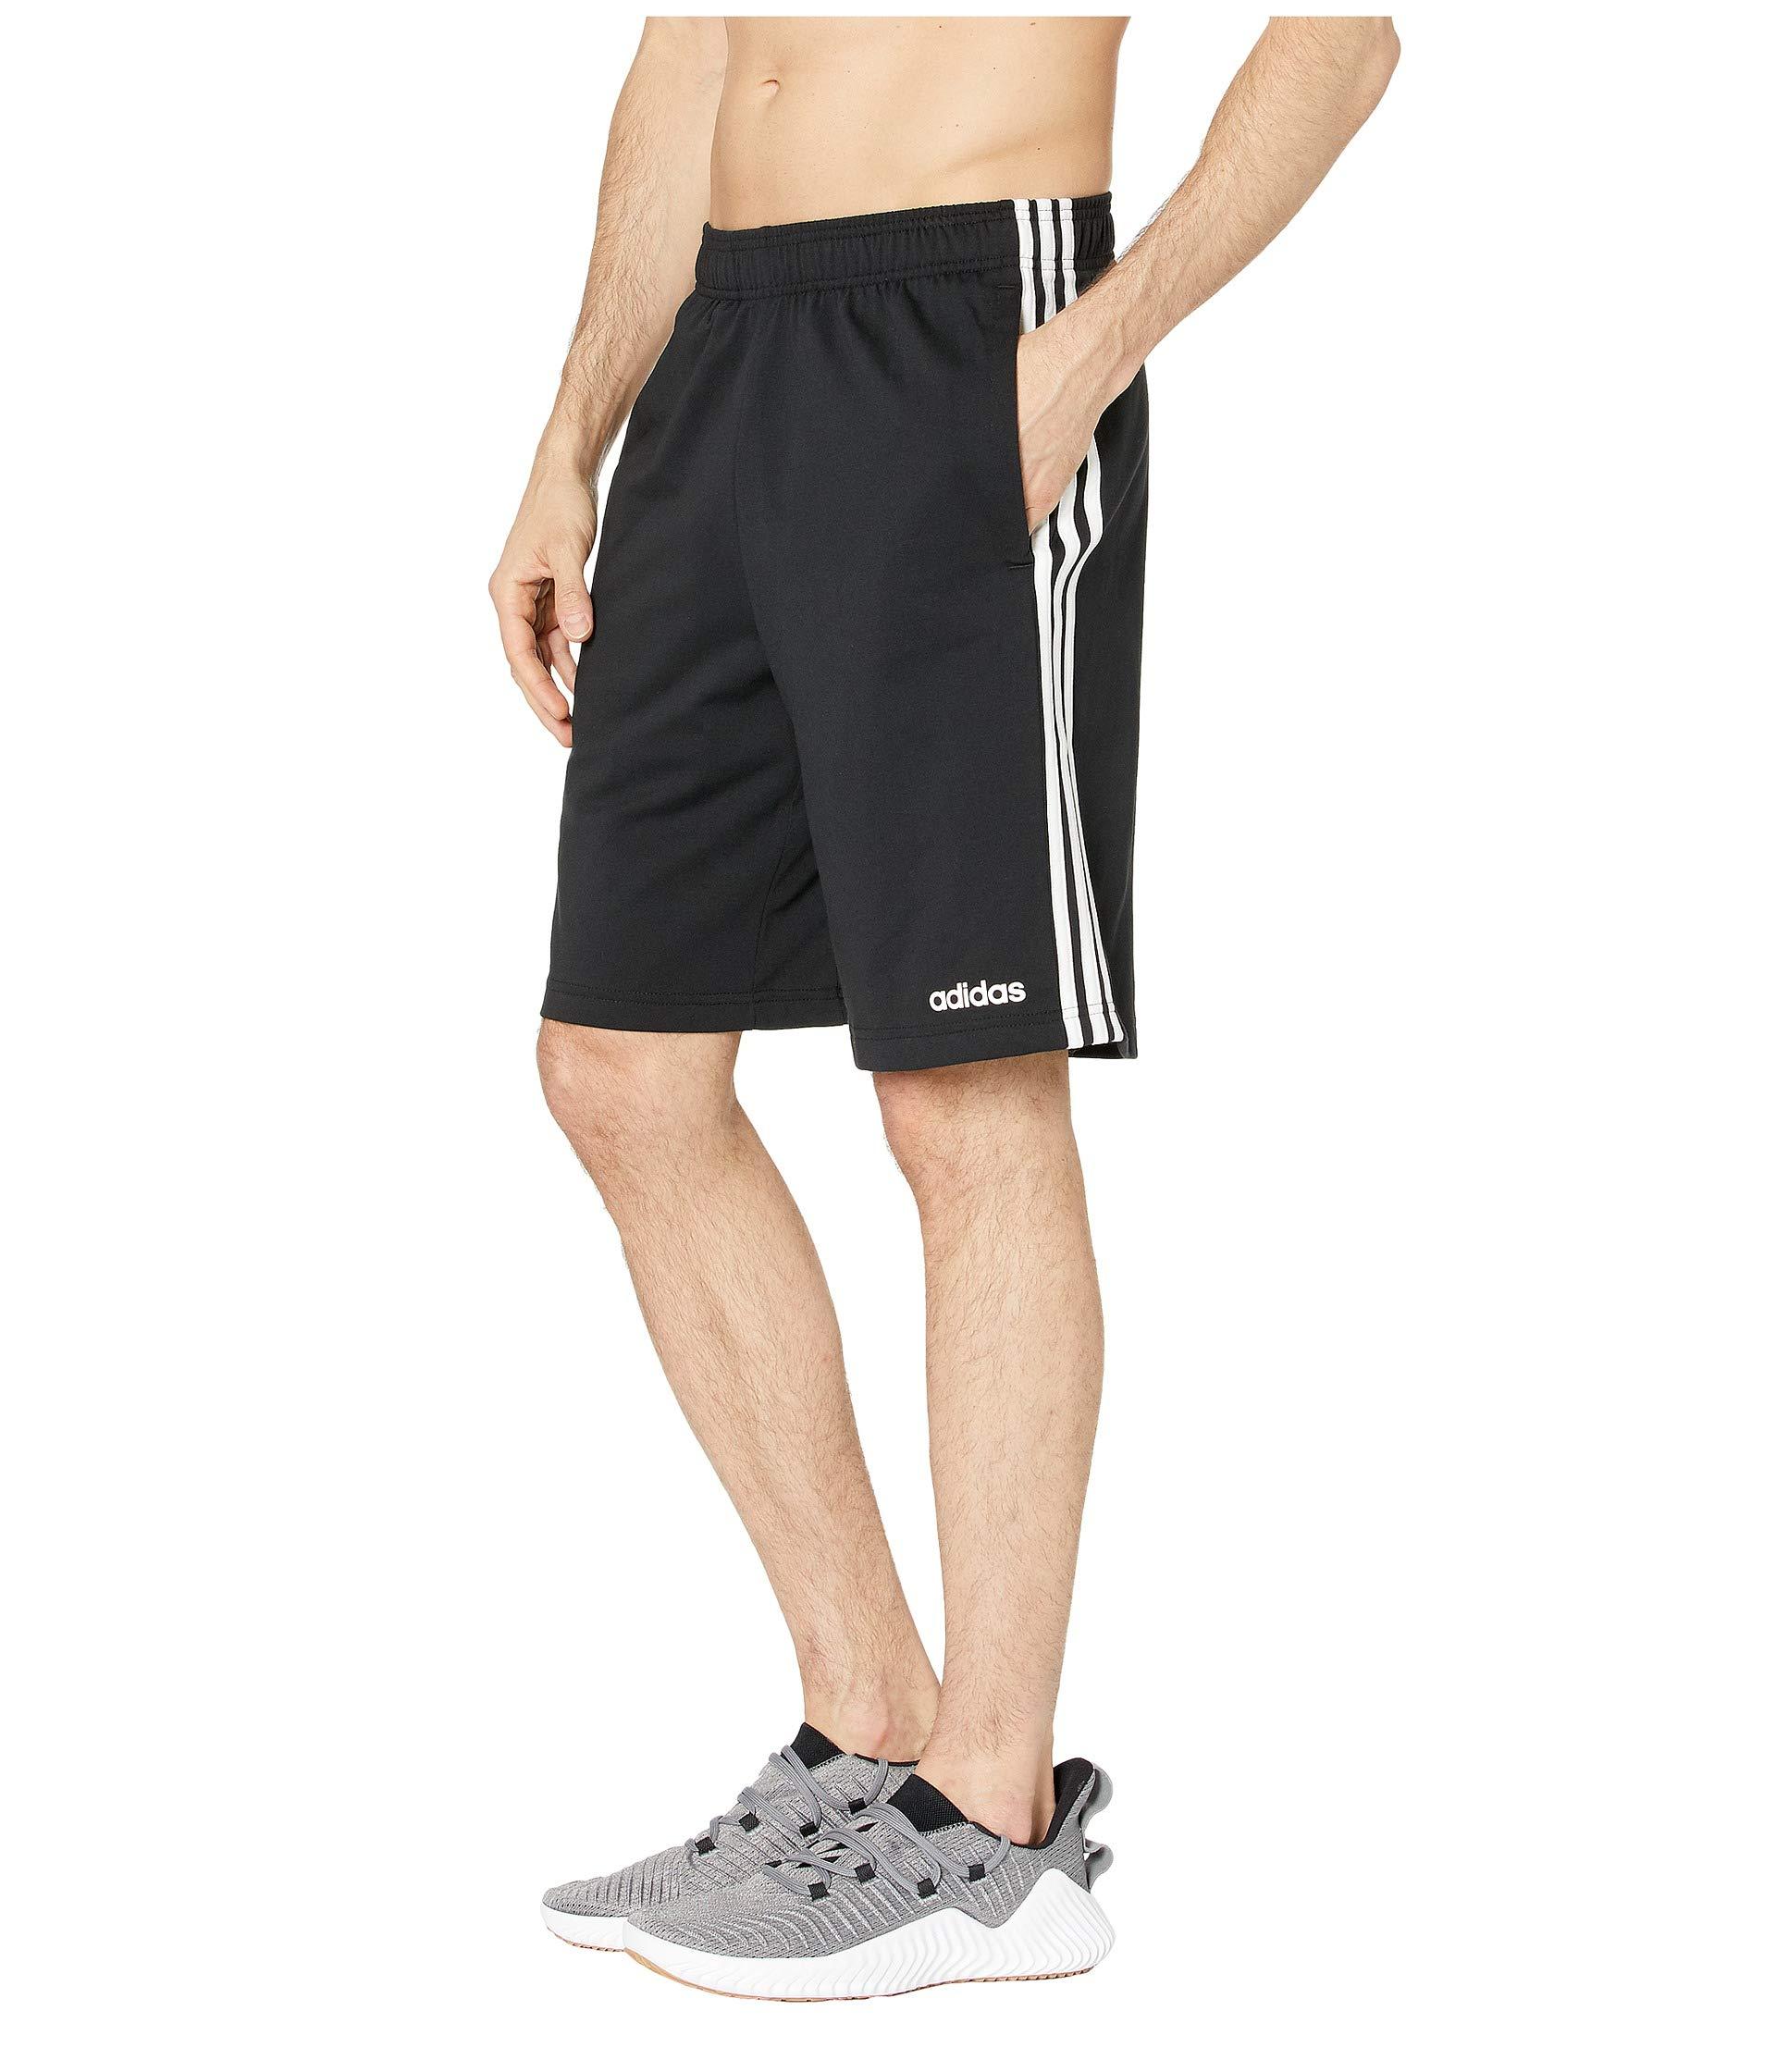 adidas Cotton 3-stripe Jersey Shorts in Black for Men - Lyst